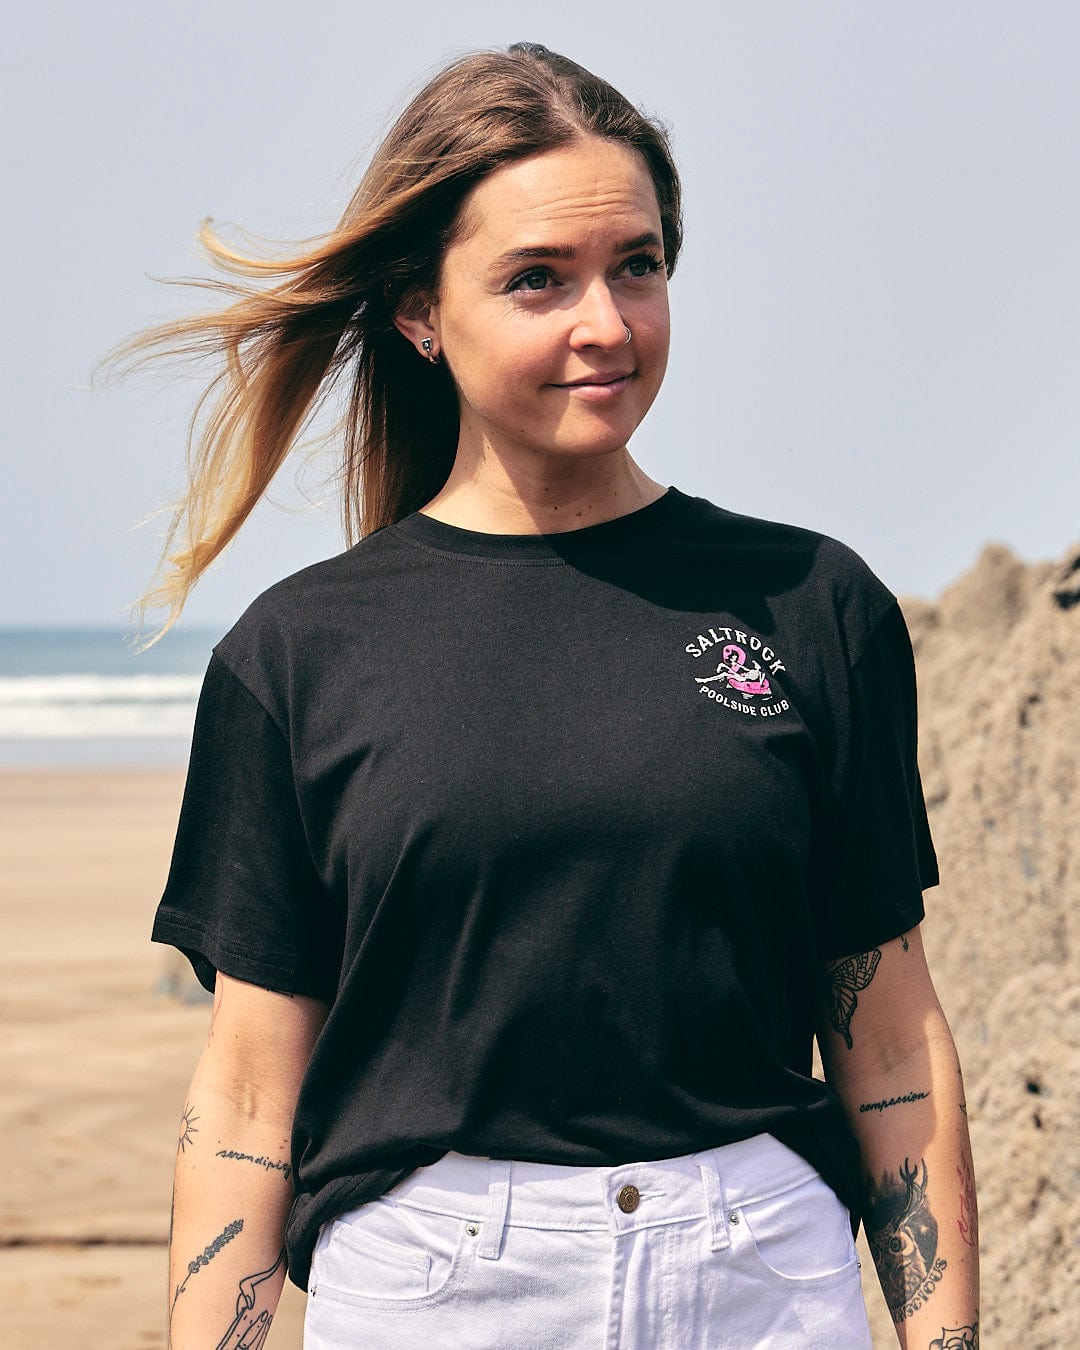 A woman wearing a Saltrock Poolside - Womens Short Sleeve T-Shirt - Black standing on the beach.